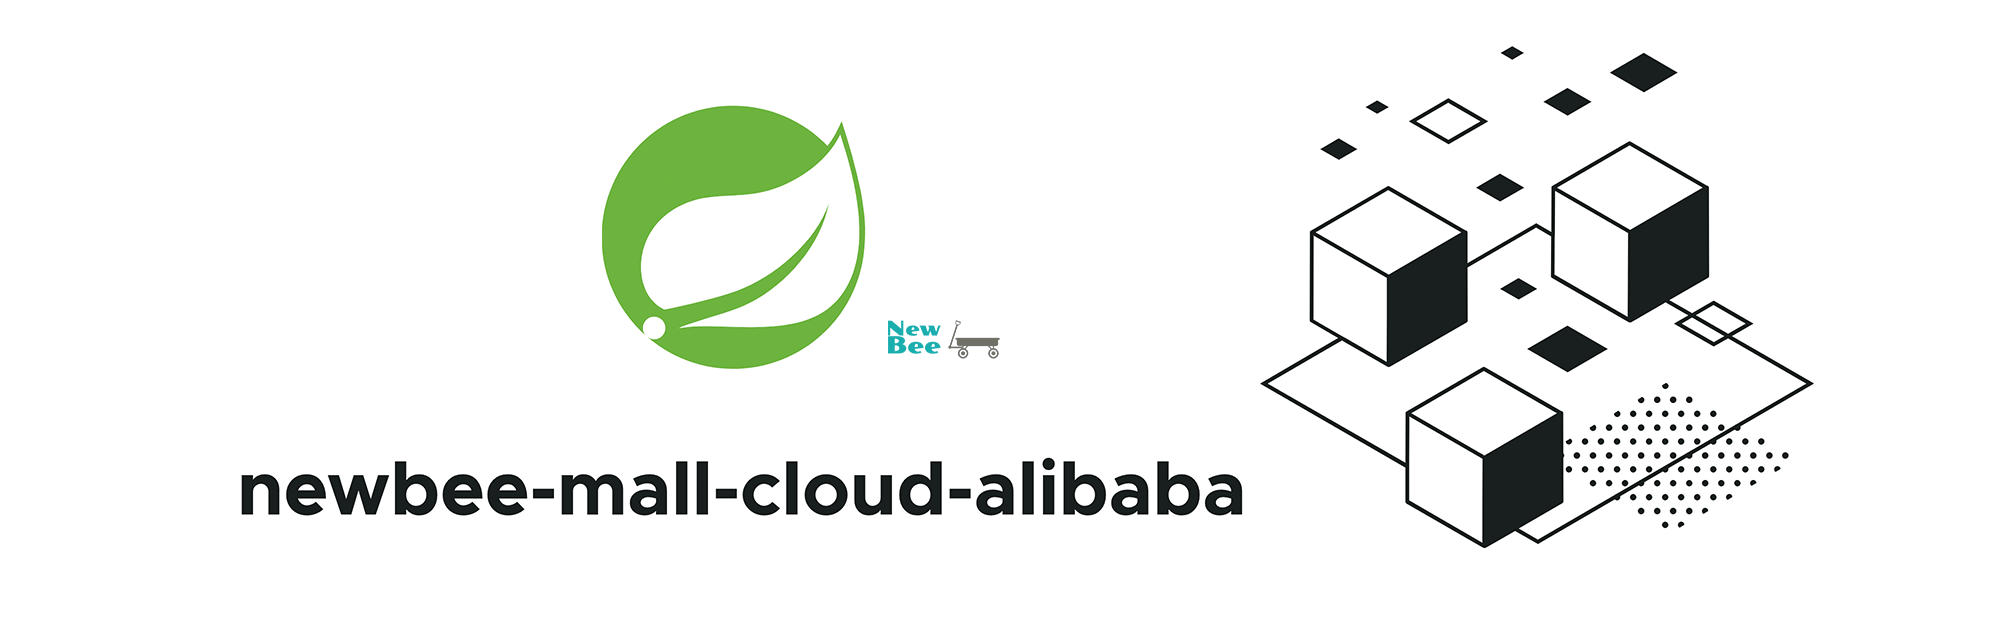 newbee-mall-cloud-alibaba